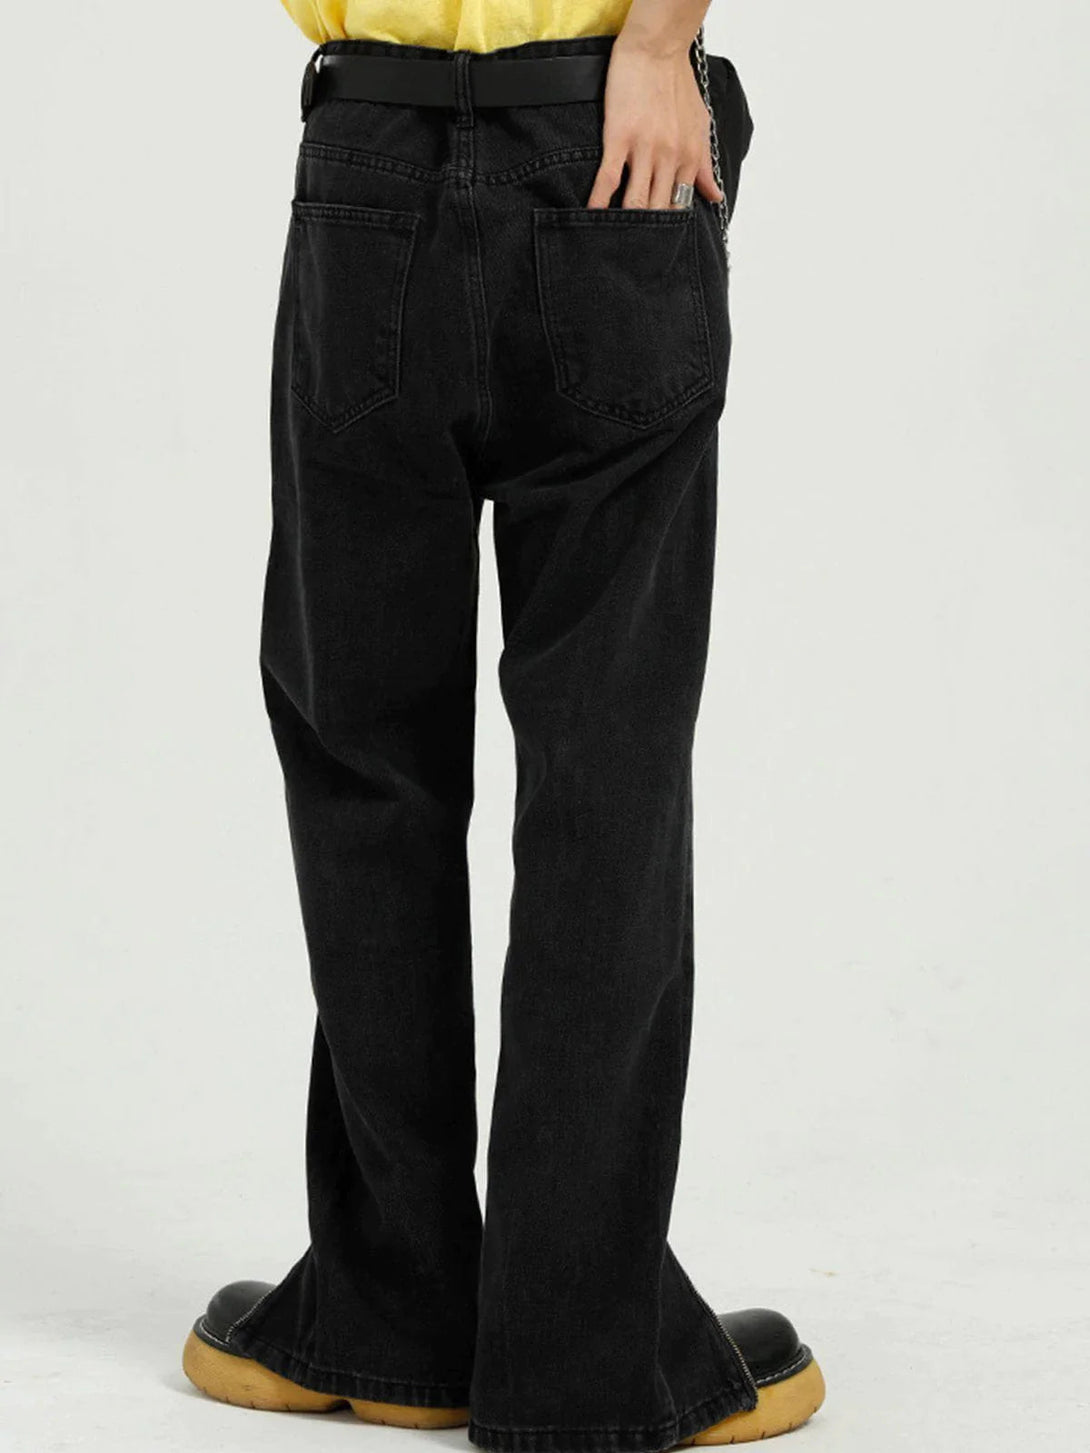 Majesda® - Zippered Straight-Leg Jeans outfit ideas streetwear fashion